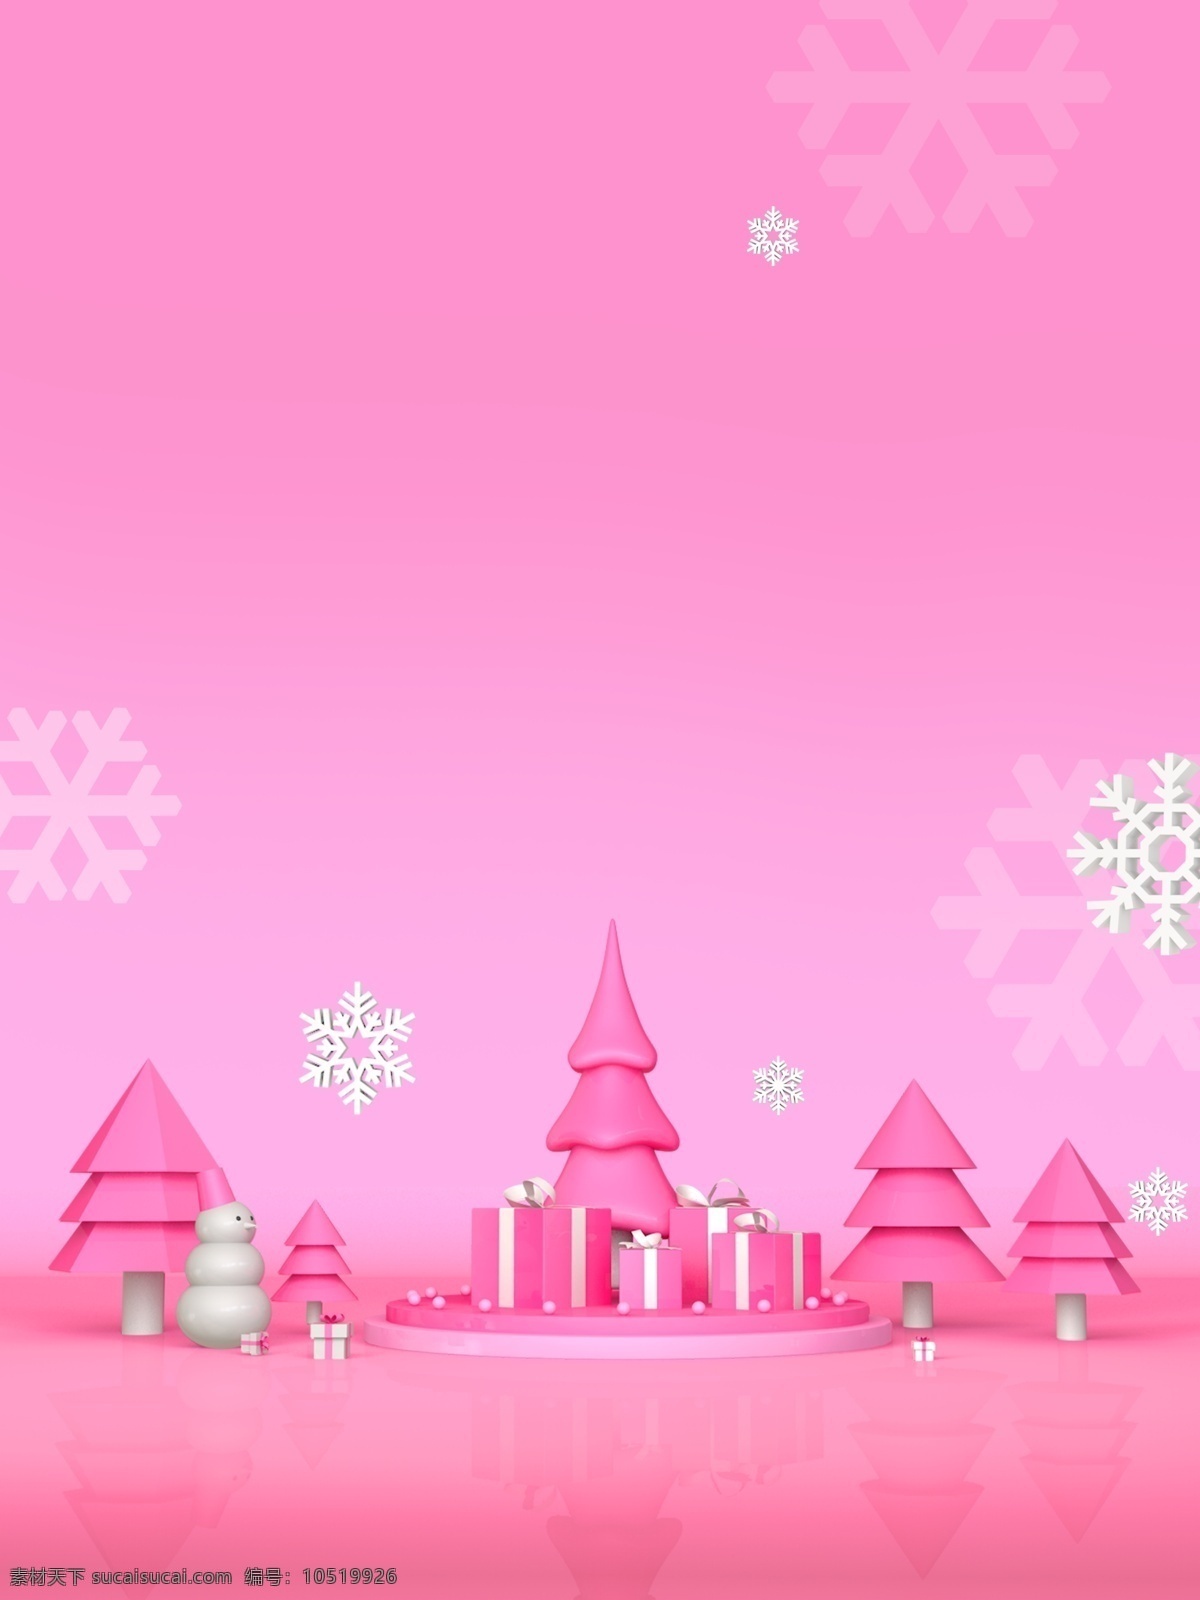 c4d 粉色 渐变 圣诞 背景 圣诞背景 城堡 童话 雪花 圣诞节背景 节日背景